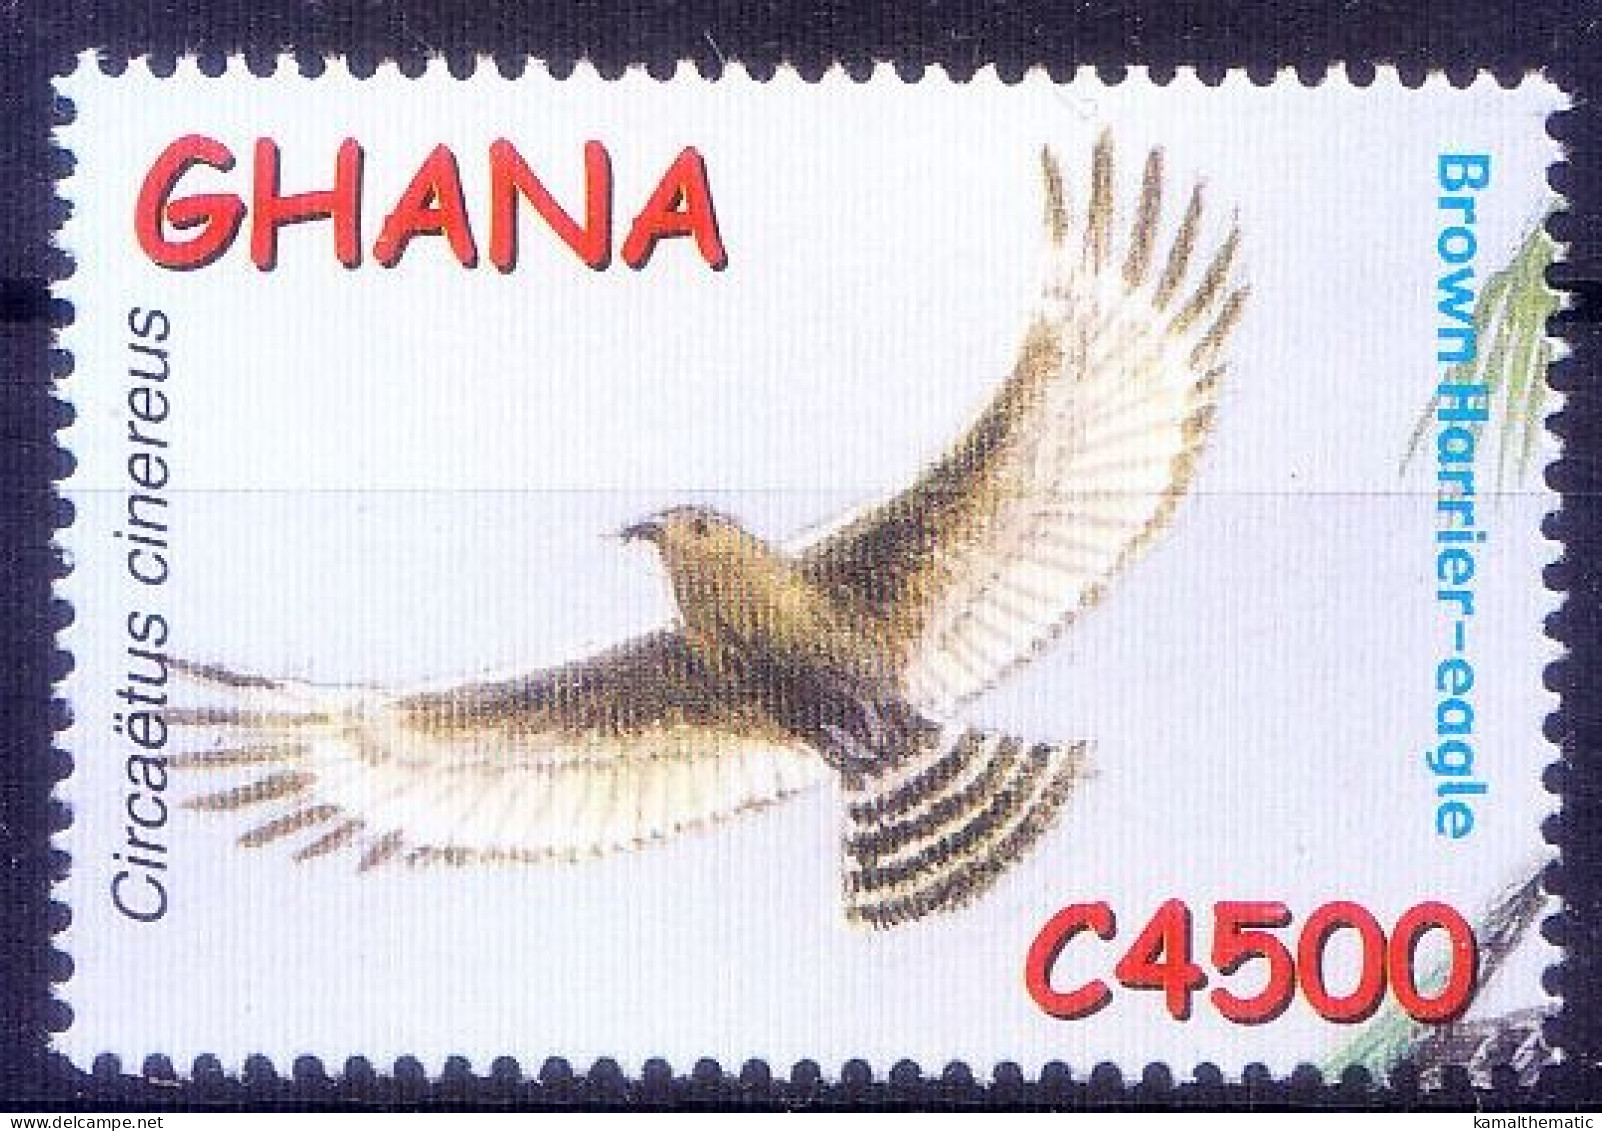 Brown Harrier Eagle, Birds Of Prey, Ghana 2002 MNH - Eagles & Birds Of Prey